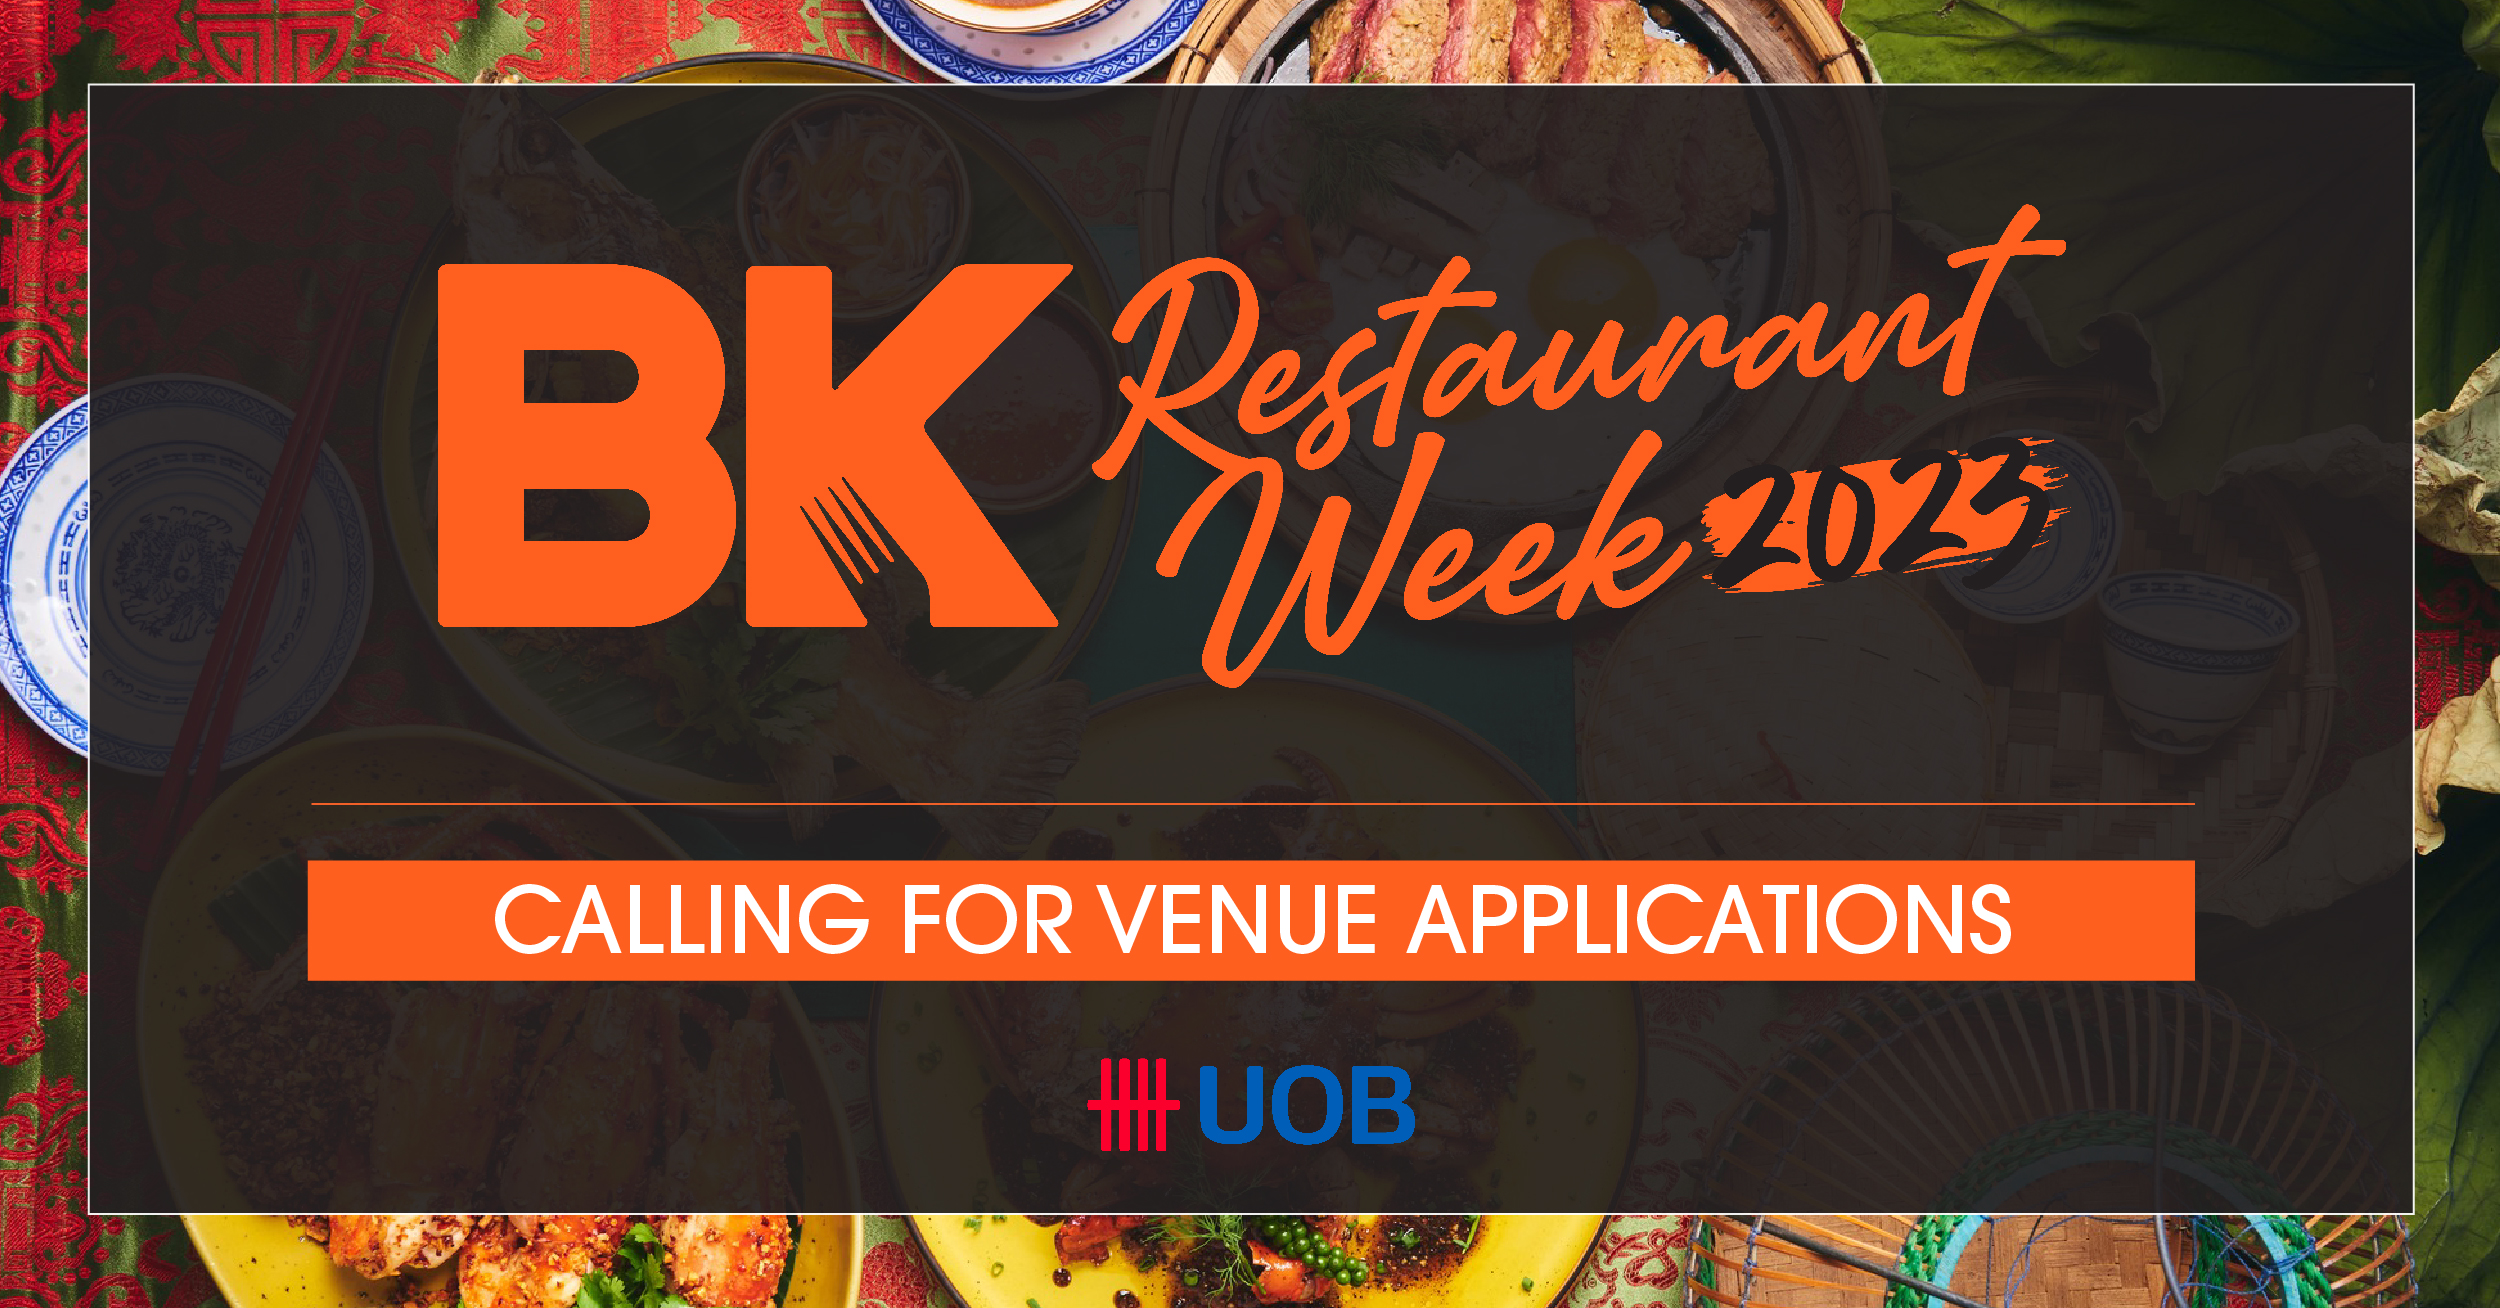 Bk Restaurant Week Cover Image 